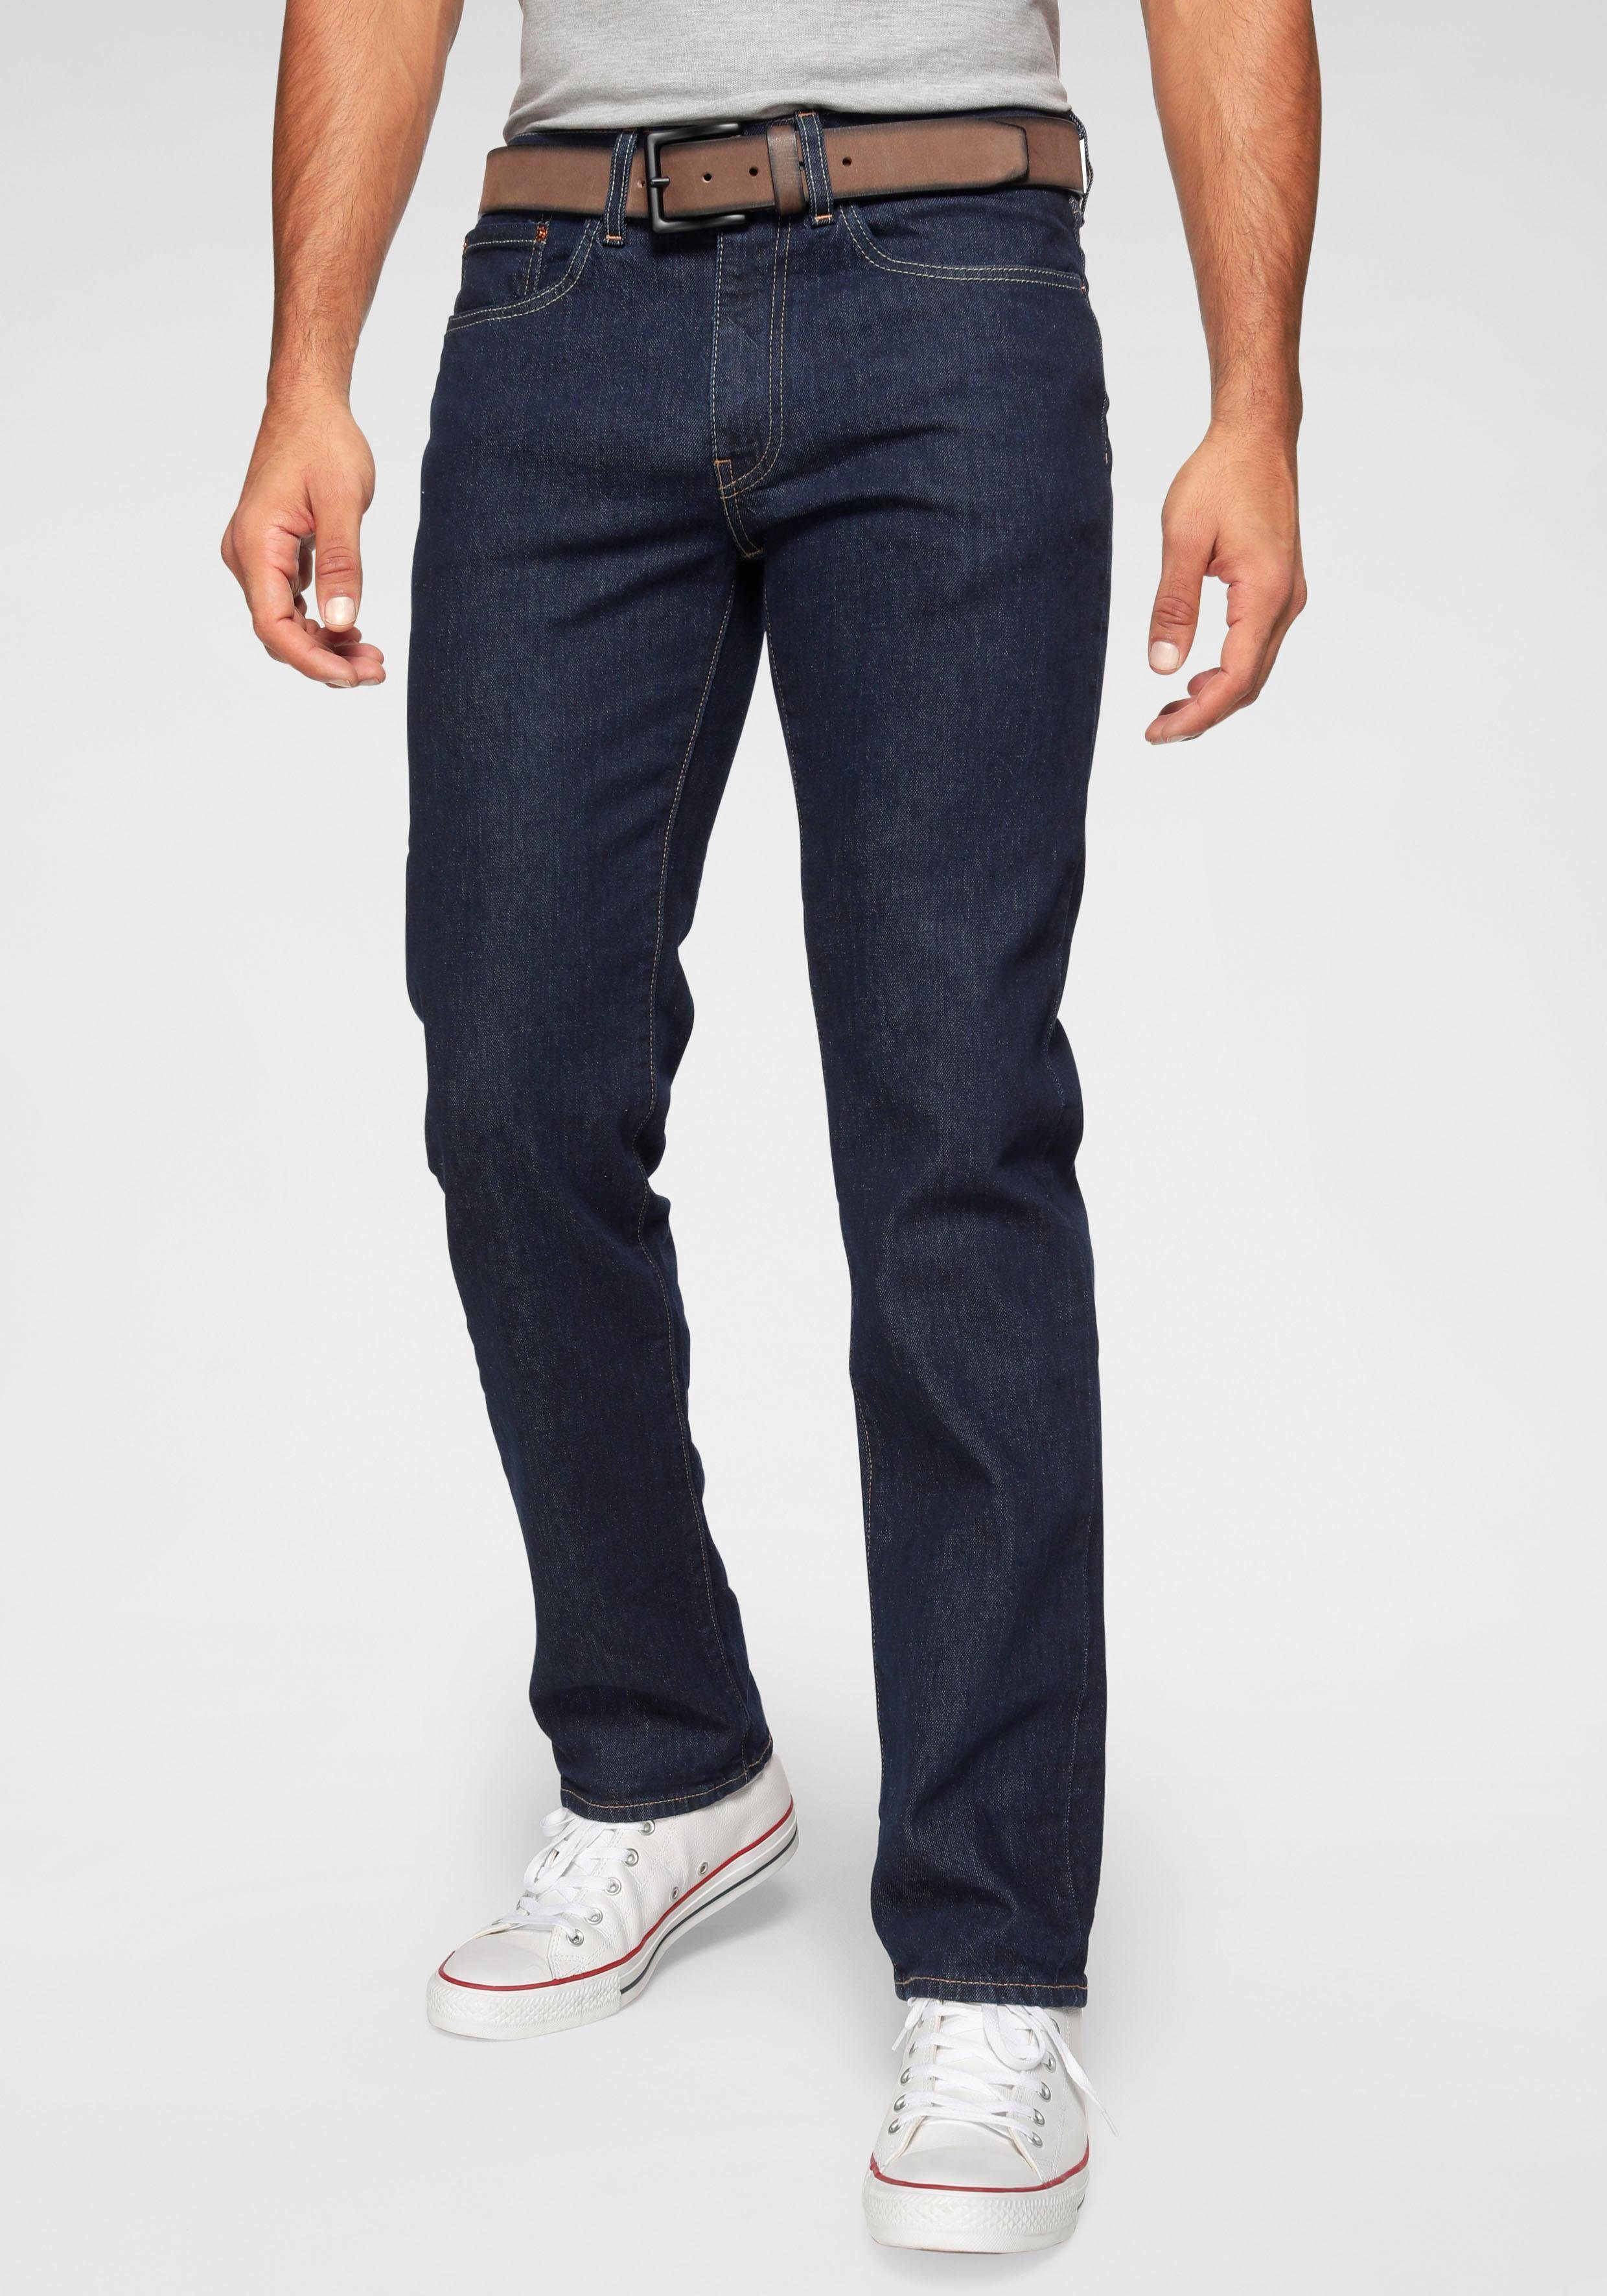 Levi's Herren Straight-Leg Jeans kaufen » Levi's 501 | OTTO